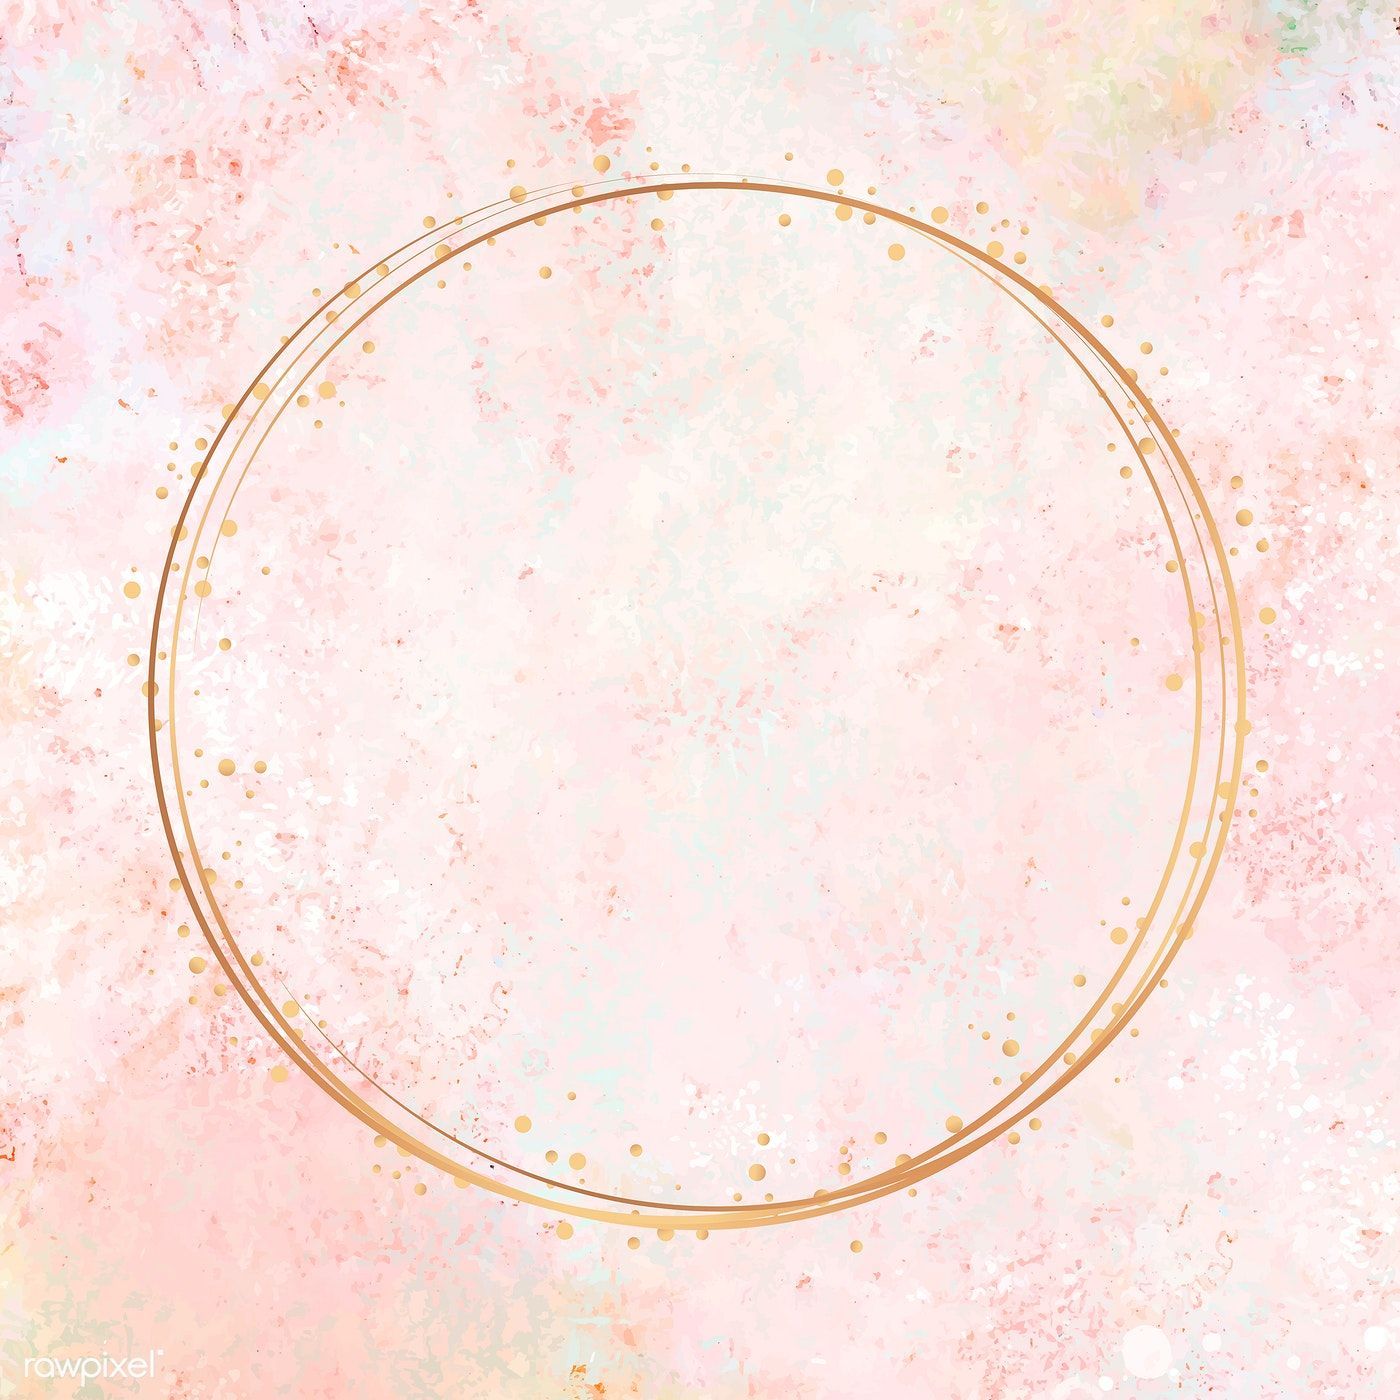 Download premium vector of Round bronze frame on pastel pink oil